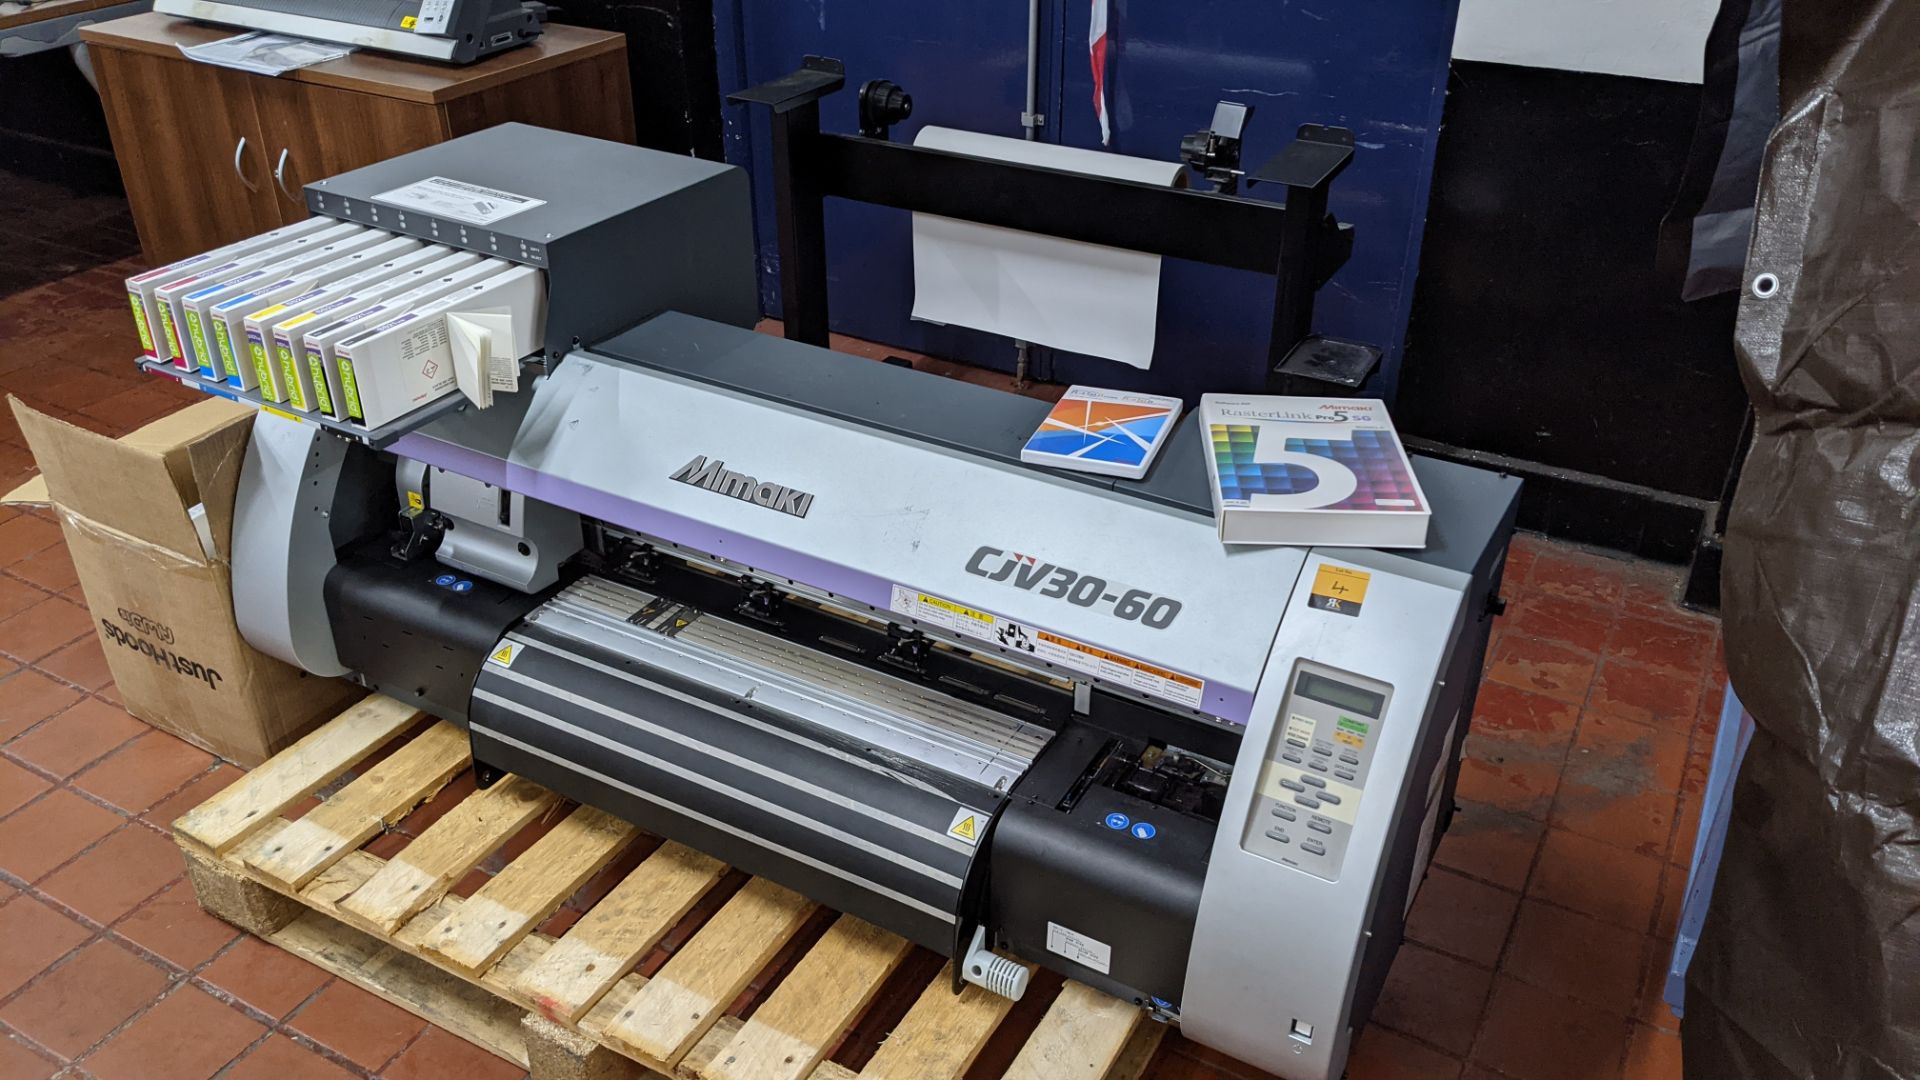 Mimaki model CJV30-60 Print & Cut Eco Solvent Printer.